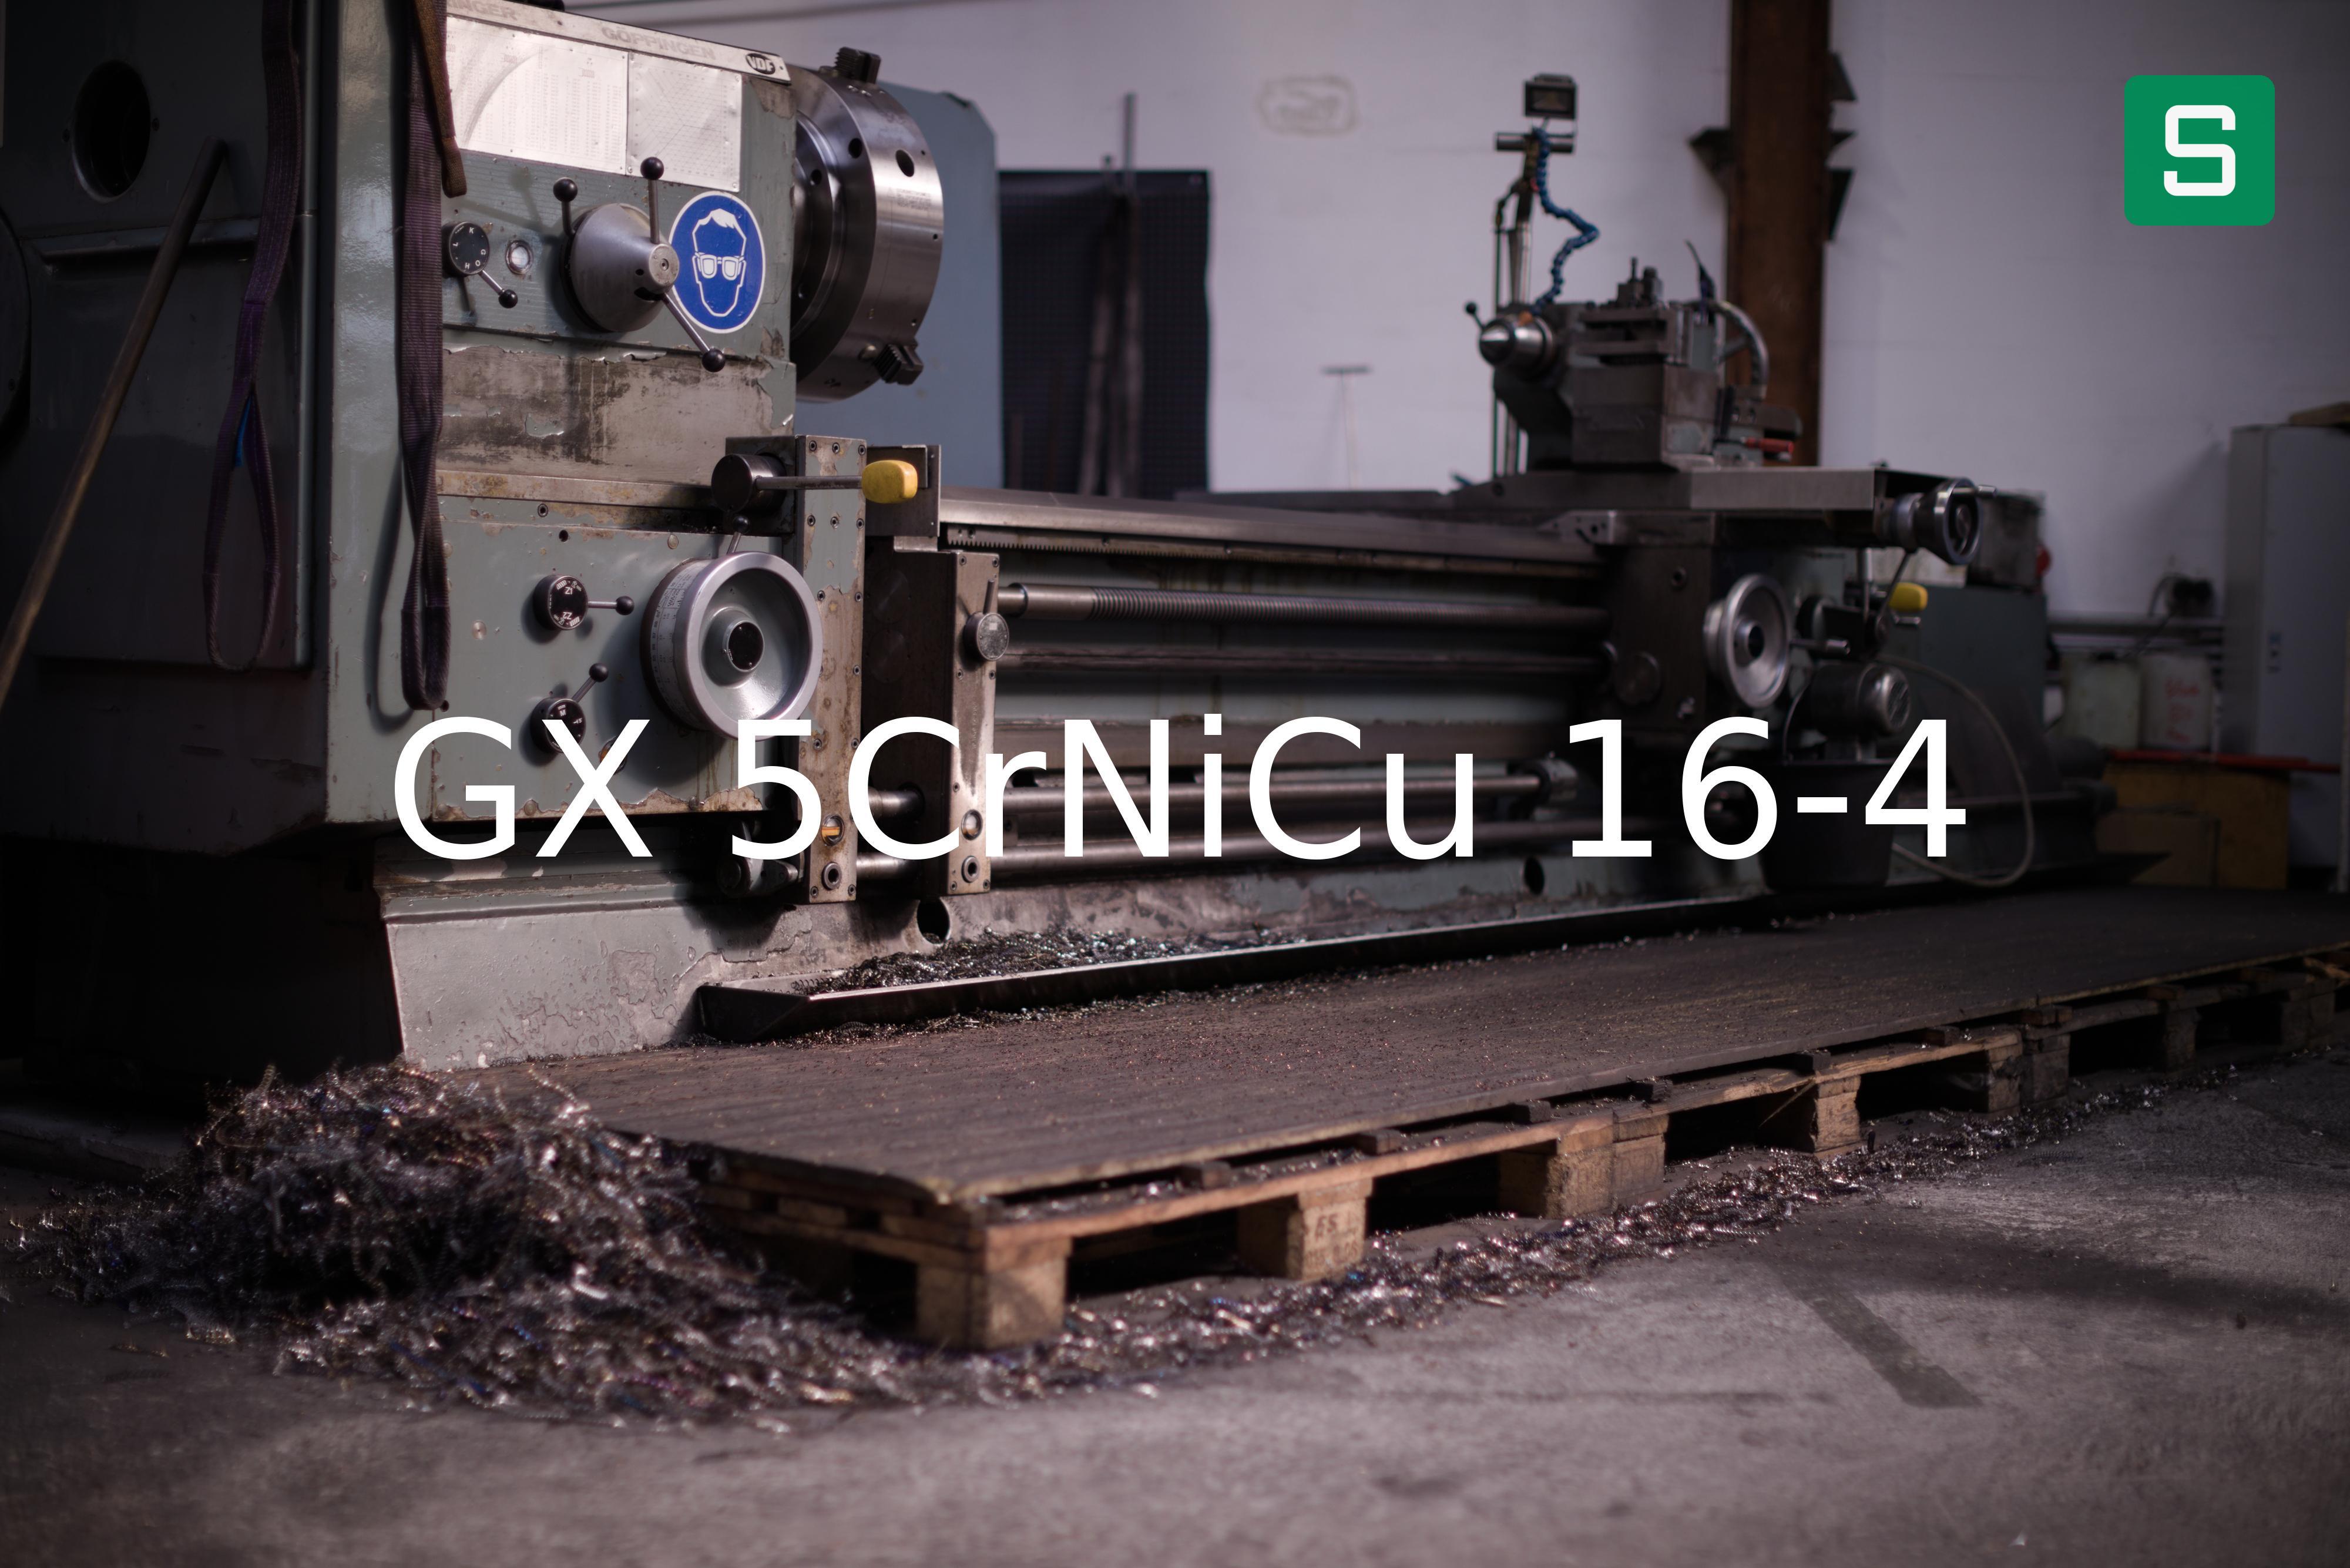 Material de Acero: GX 5CrNiCu 16-4